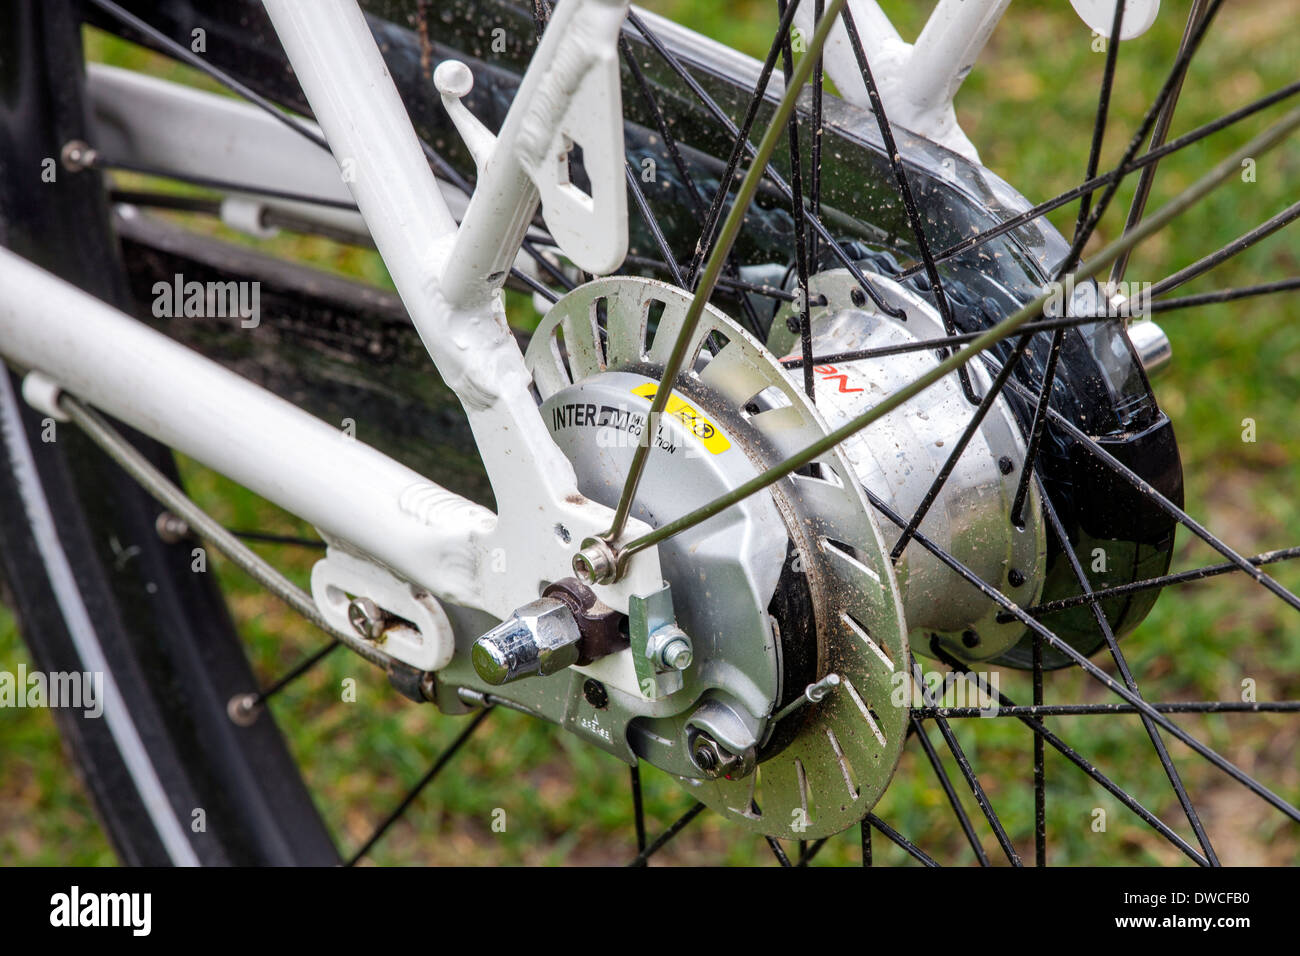 Rear hub motor of pedelec / e-bike / electric bicycle Stock Photo